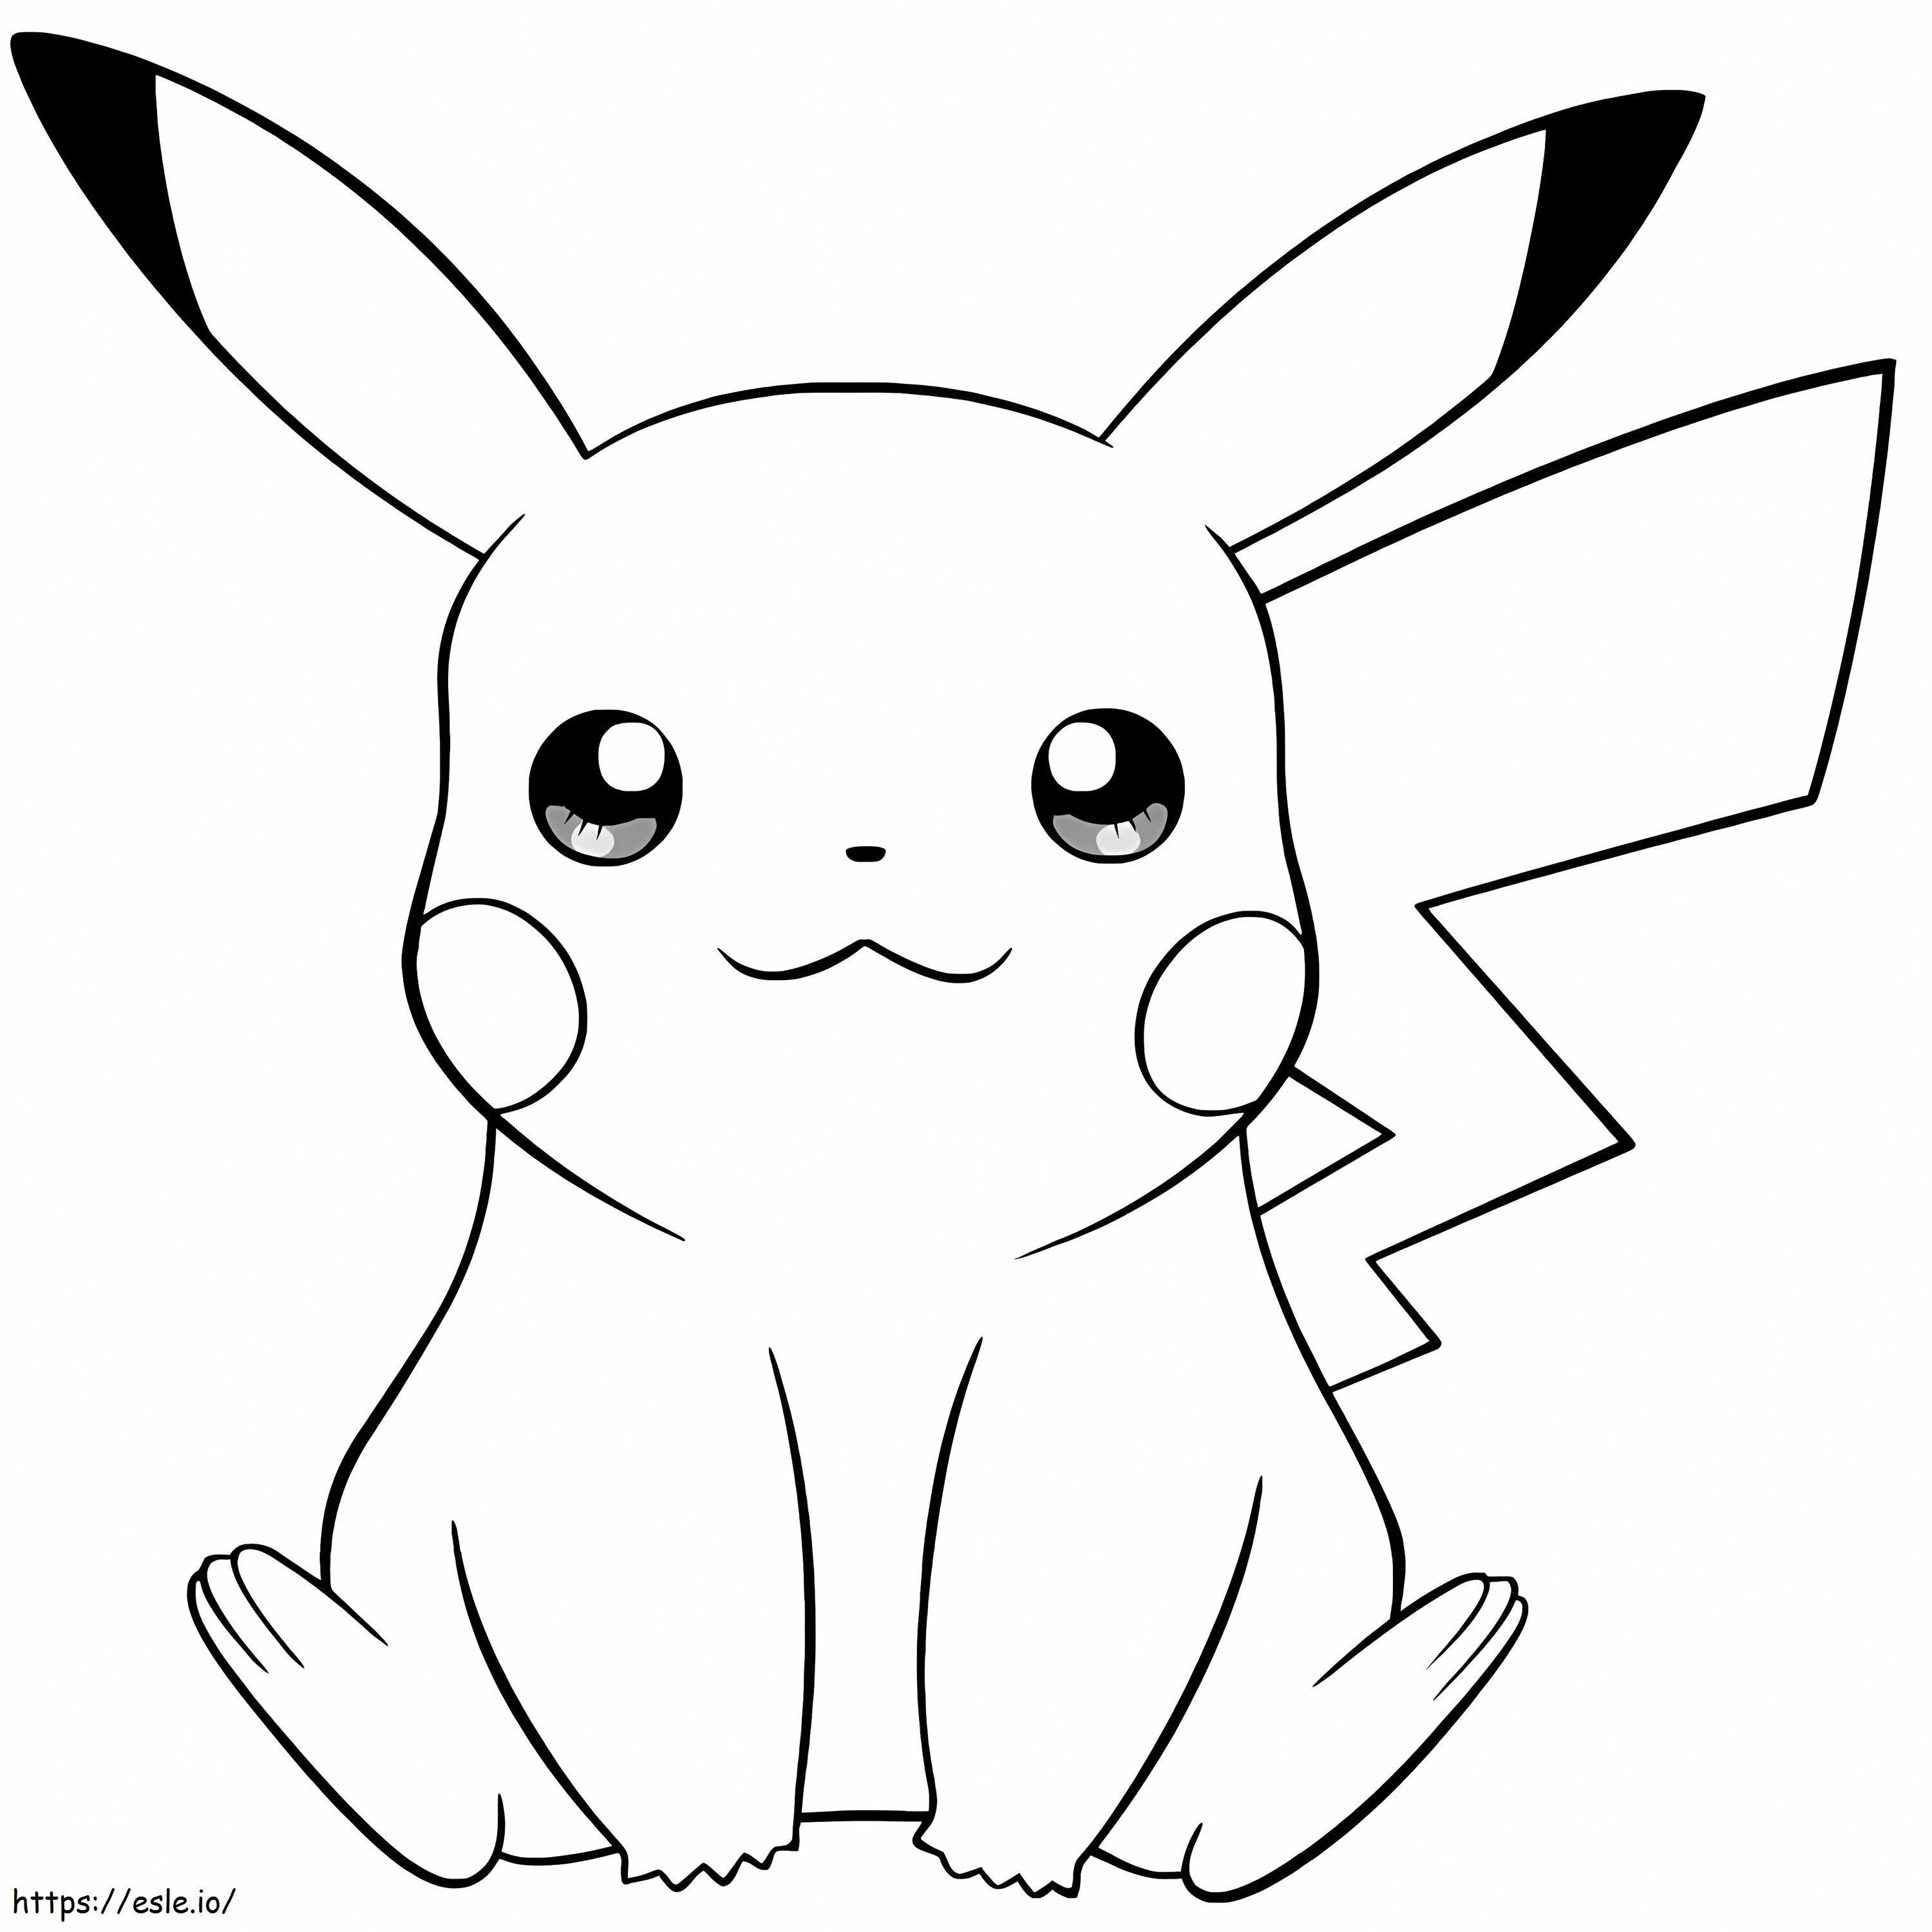 Coloriage Pikachu Kawaii à imprimer dessin